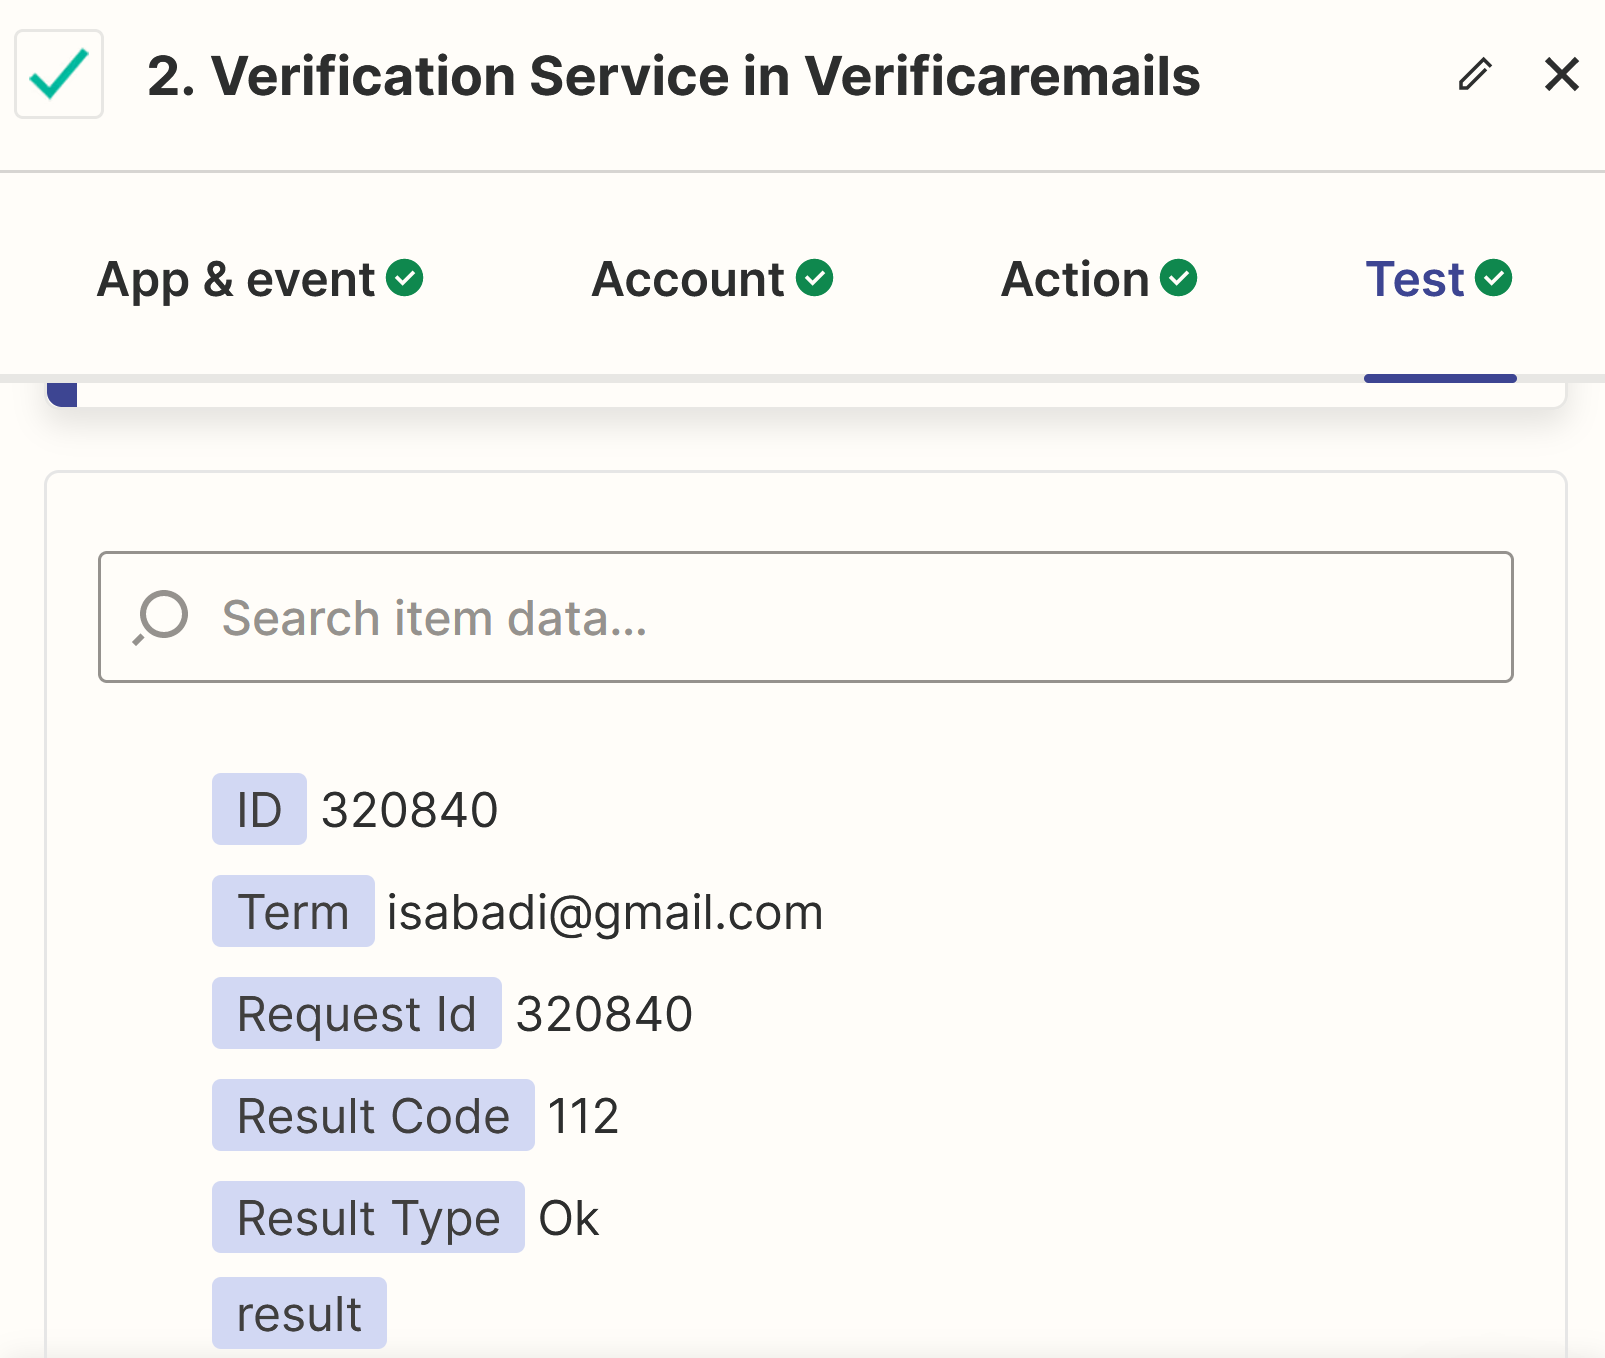 Verify email address verification response with Verificaremails